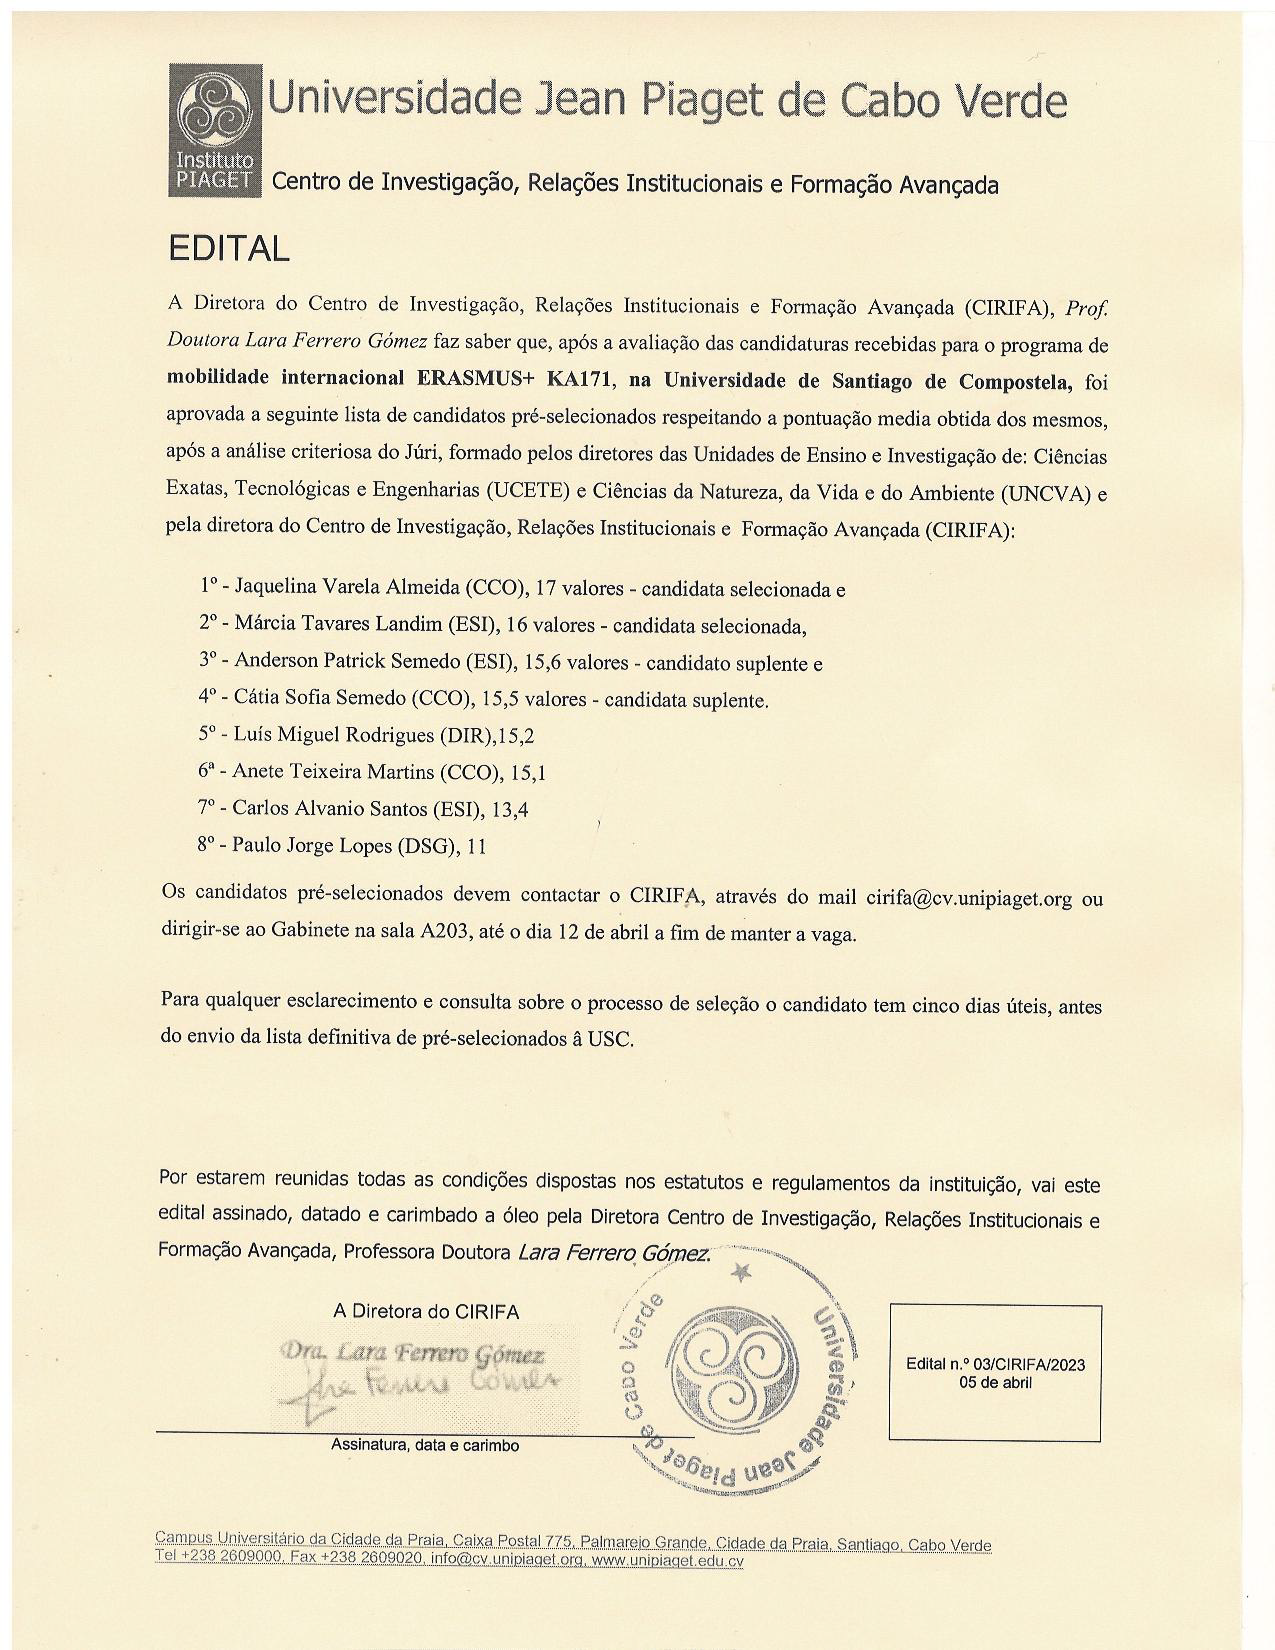 Leonilde Almeida.pdf - Universidade Jean Piaget de Cabo Verde